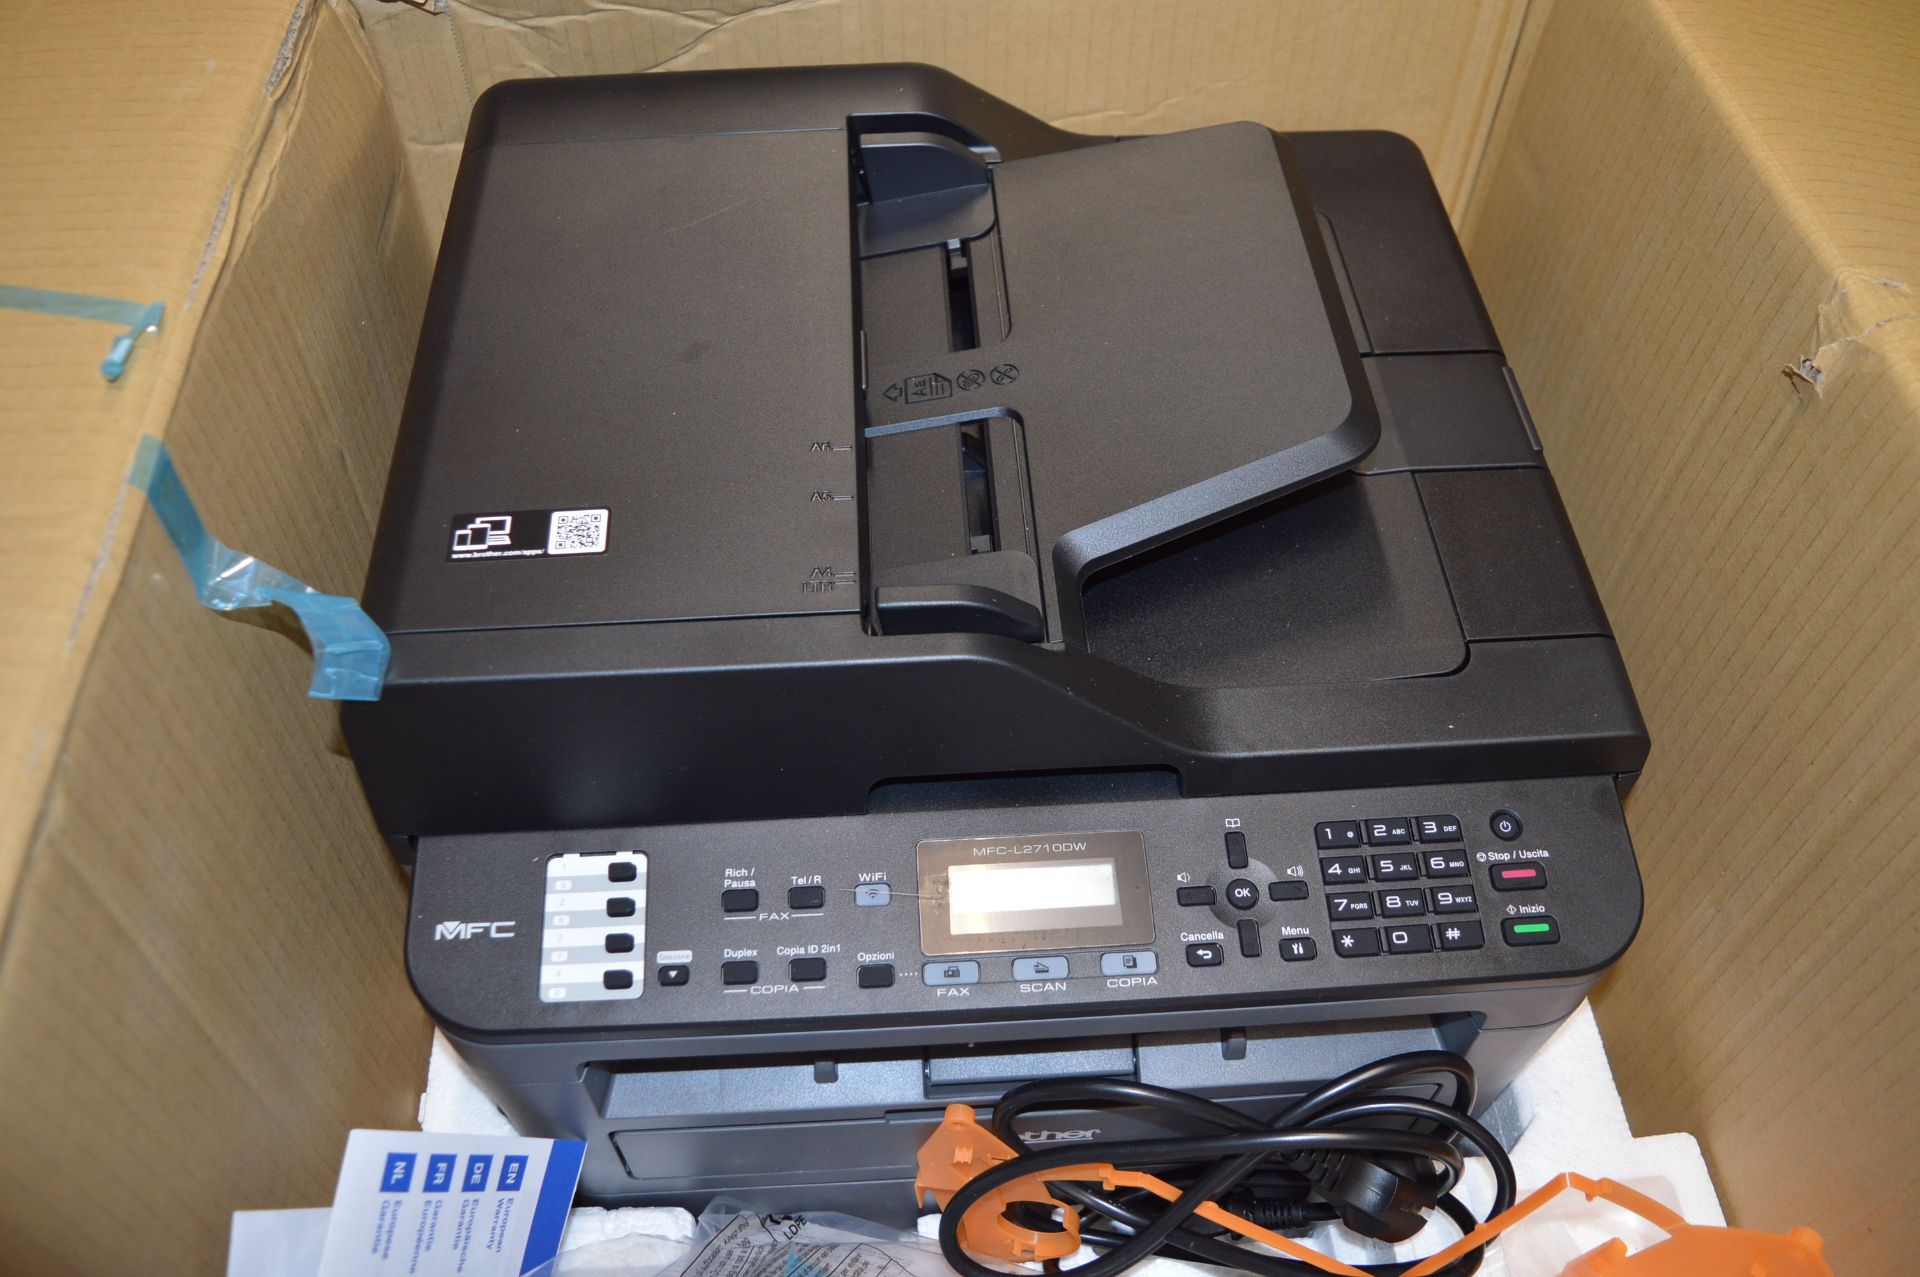 *Brother MFC-L2710DW Printer